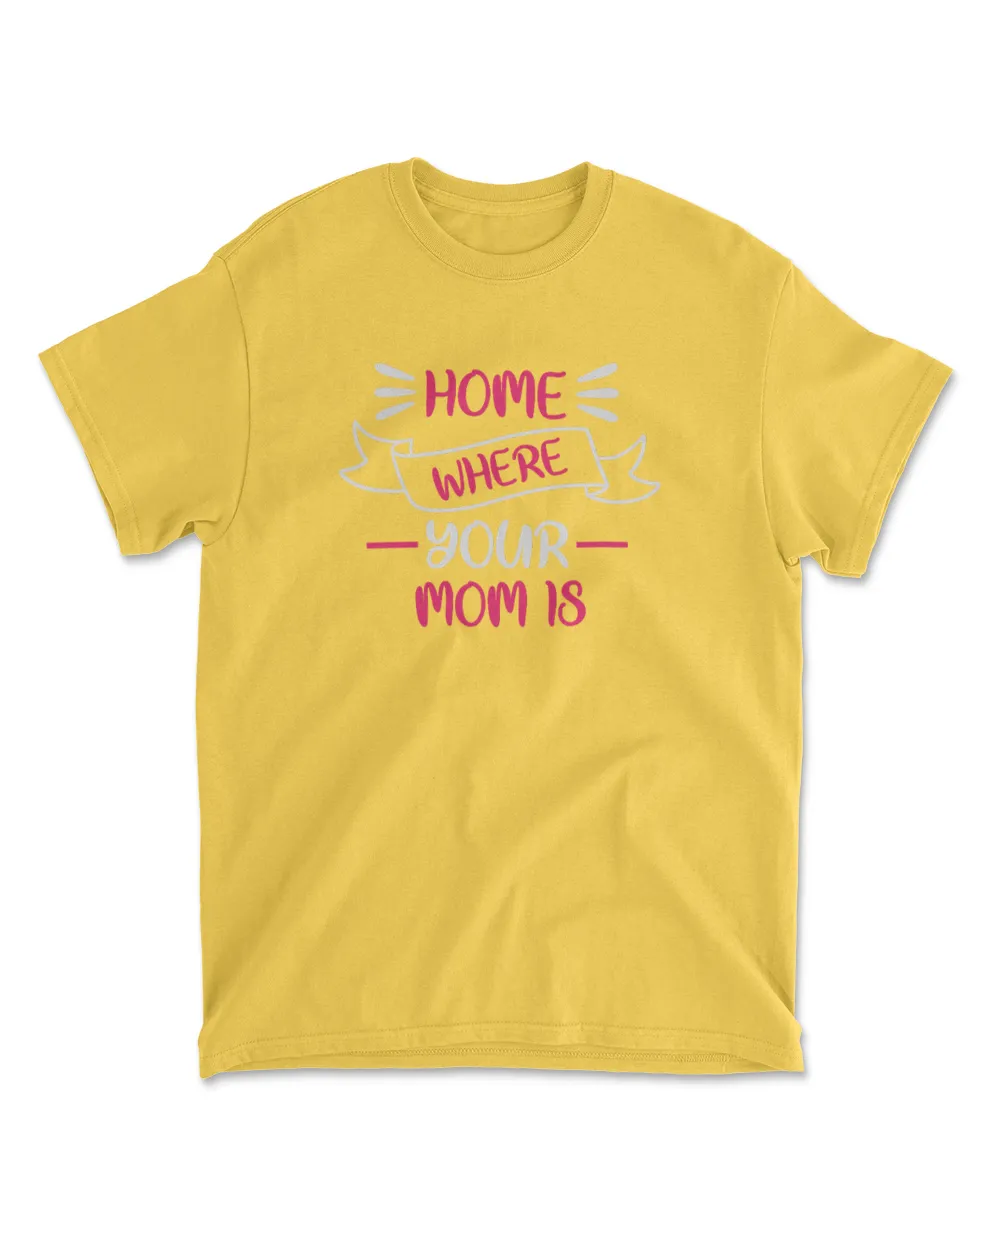 Home is where your grandma is tee t shirt